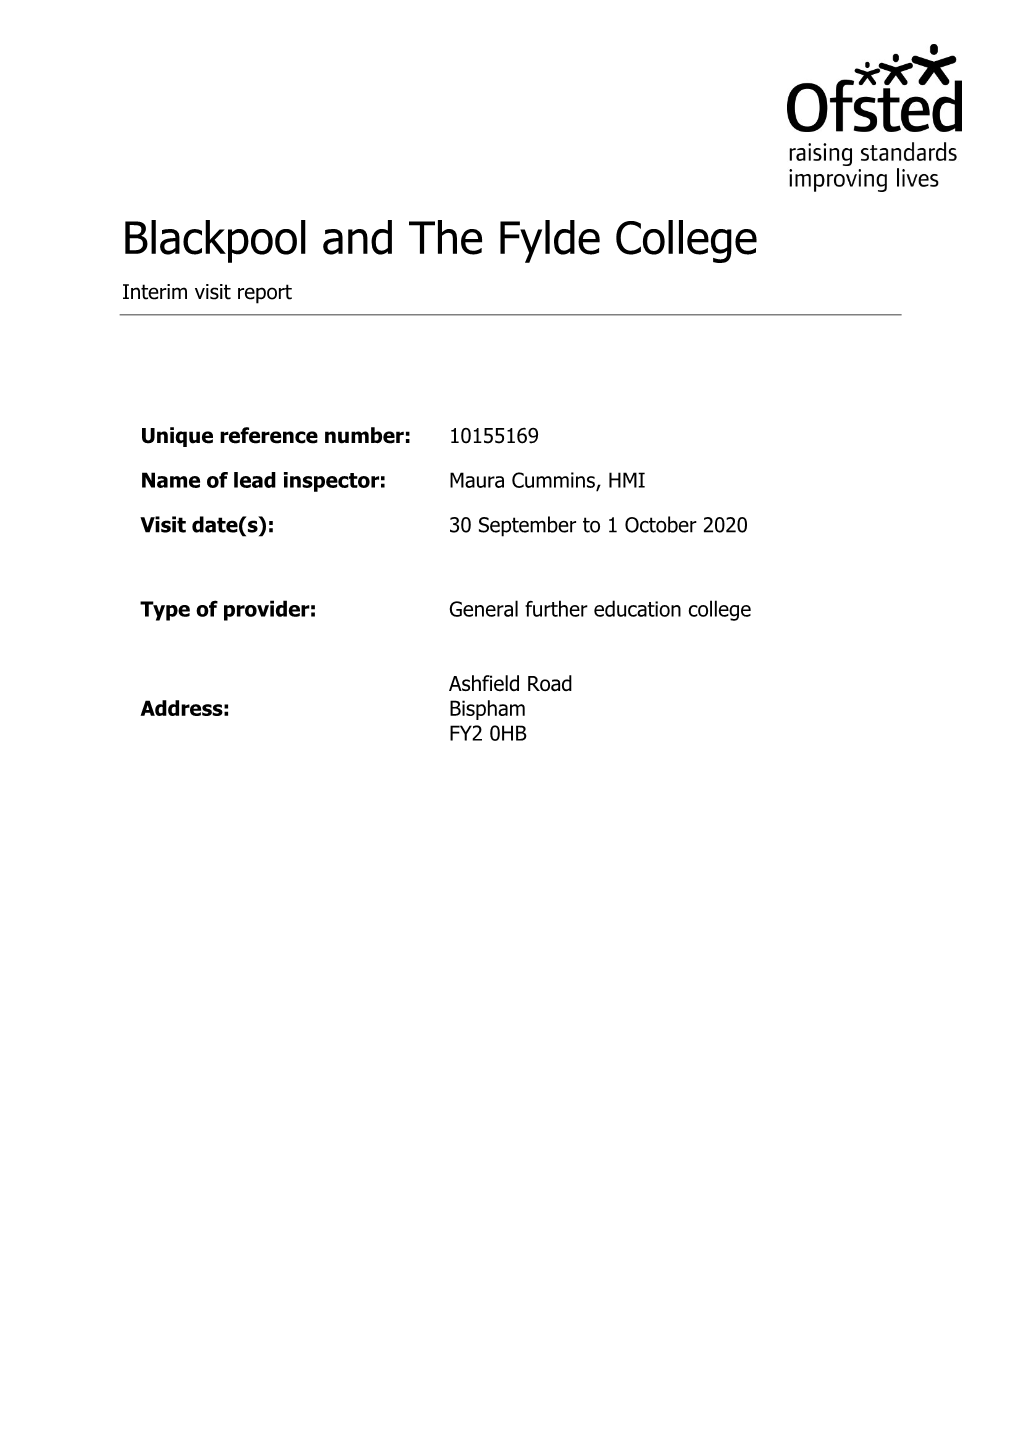 Blackpool and the Fylde College Interim Visit Report